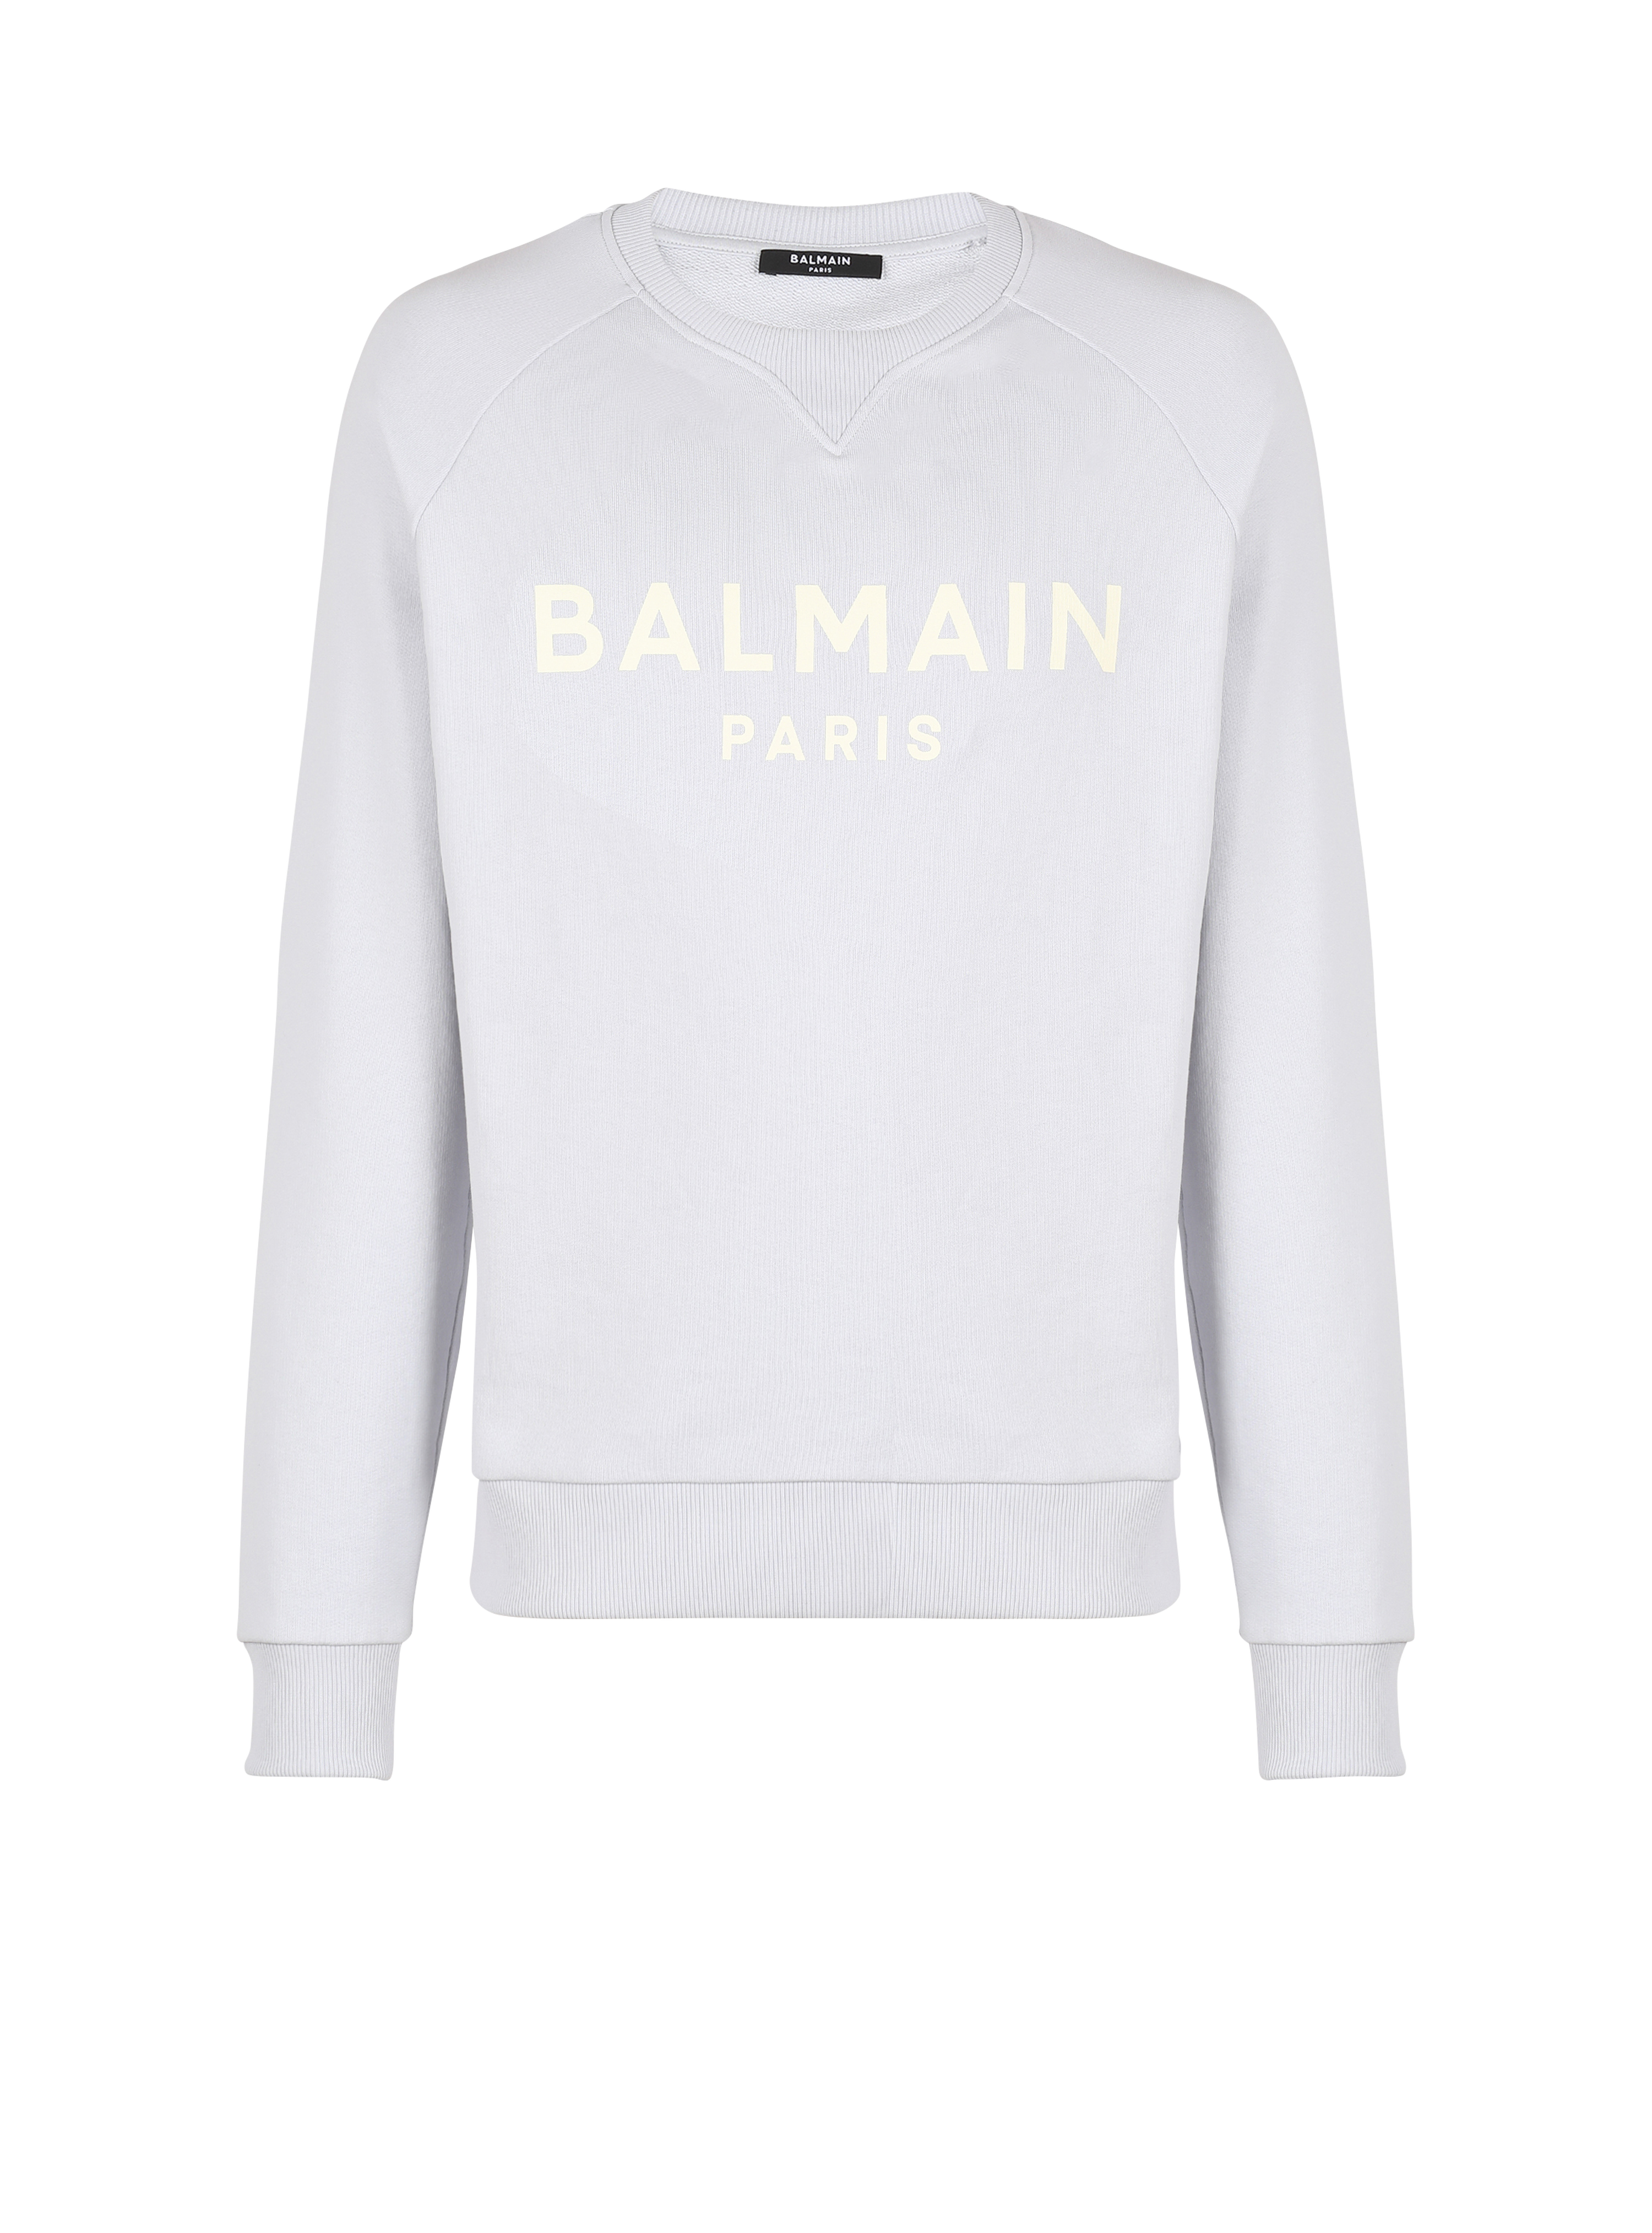 Cotton printed Balmain logo sweatshirt, blue